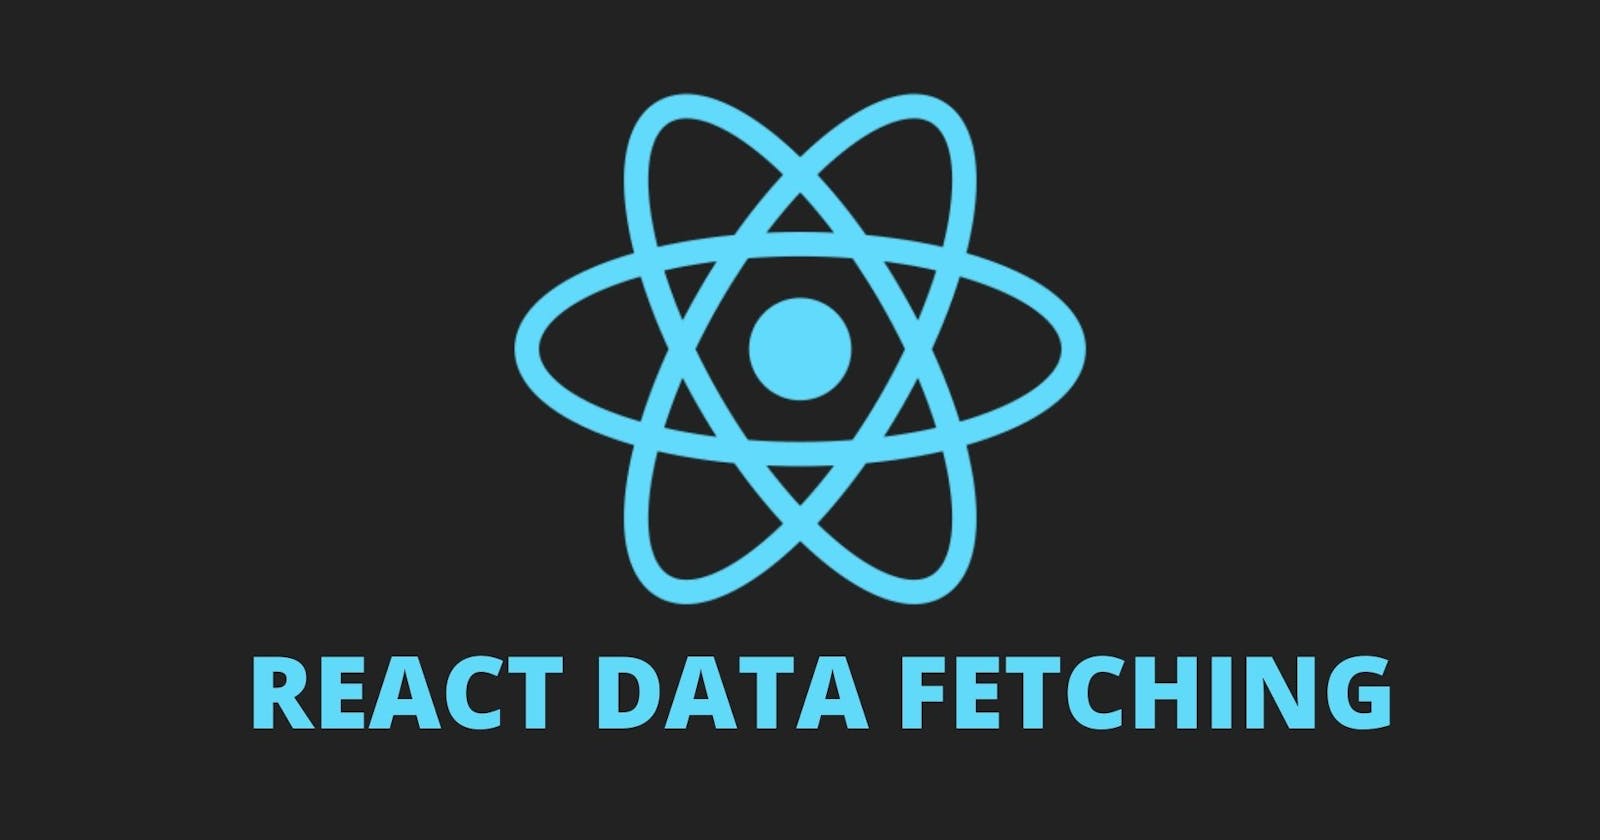 Fetching Data in React